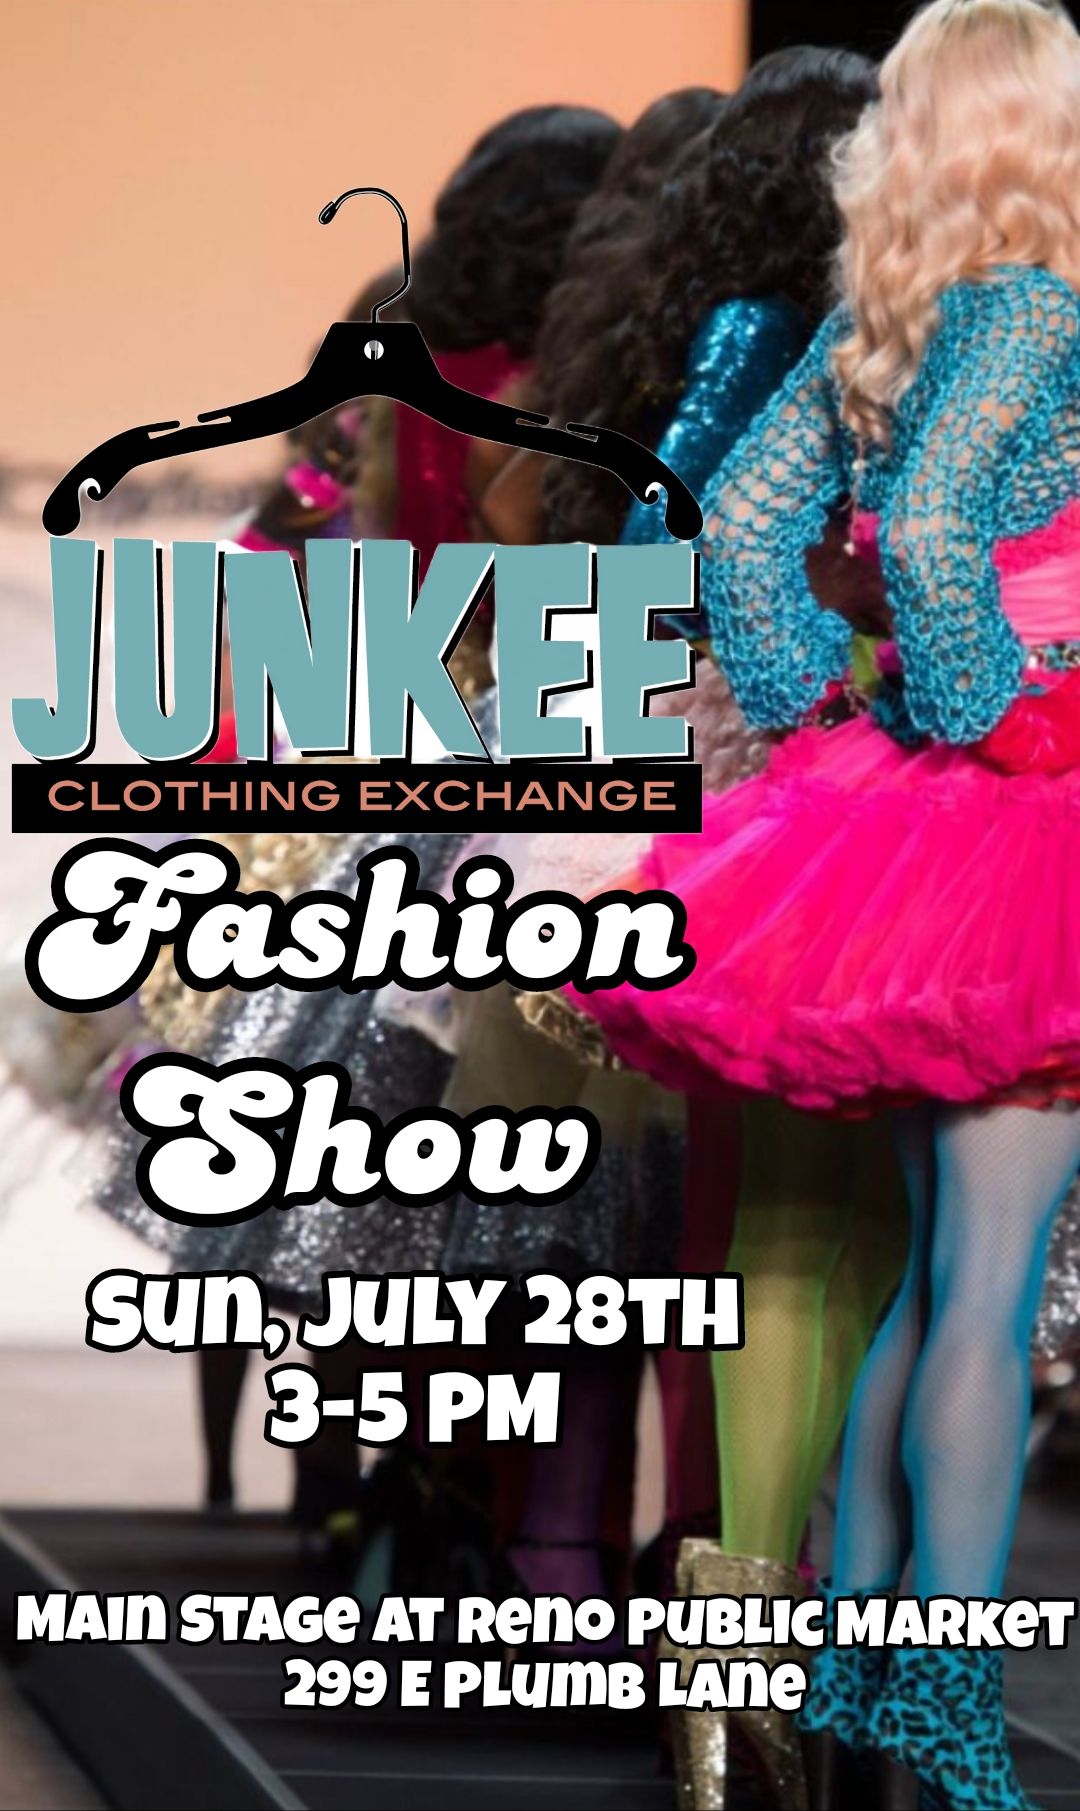 Junkee Fashion Show!